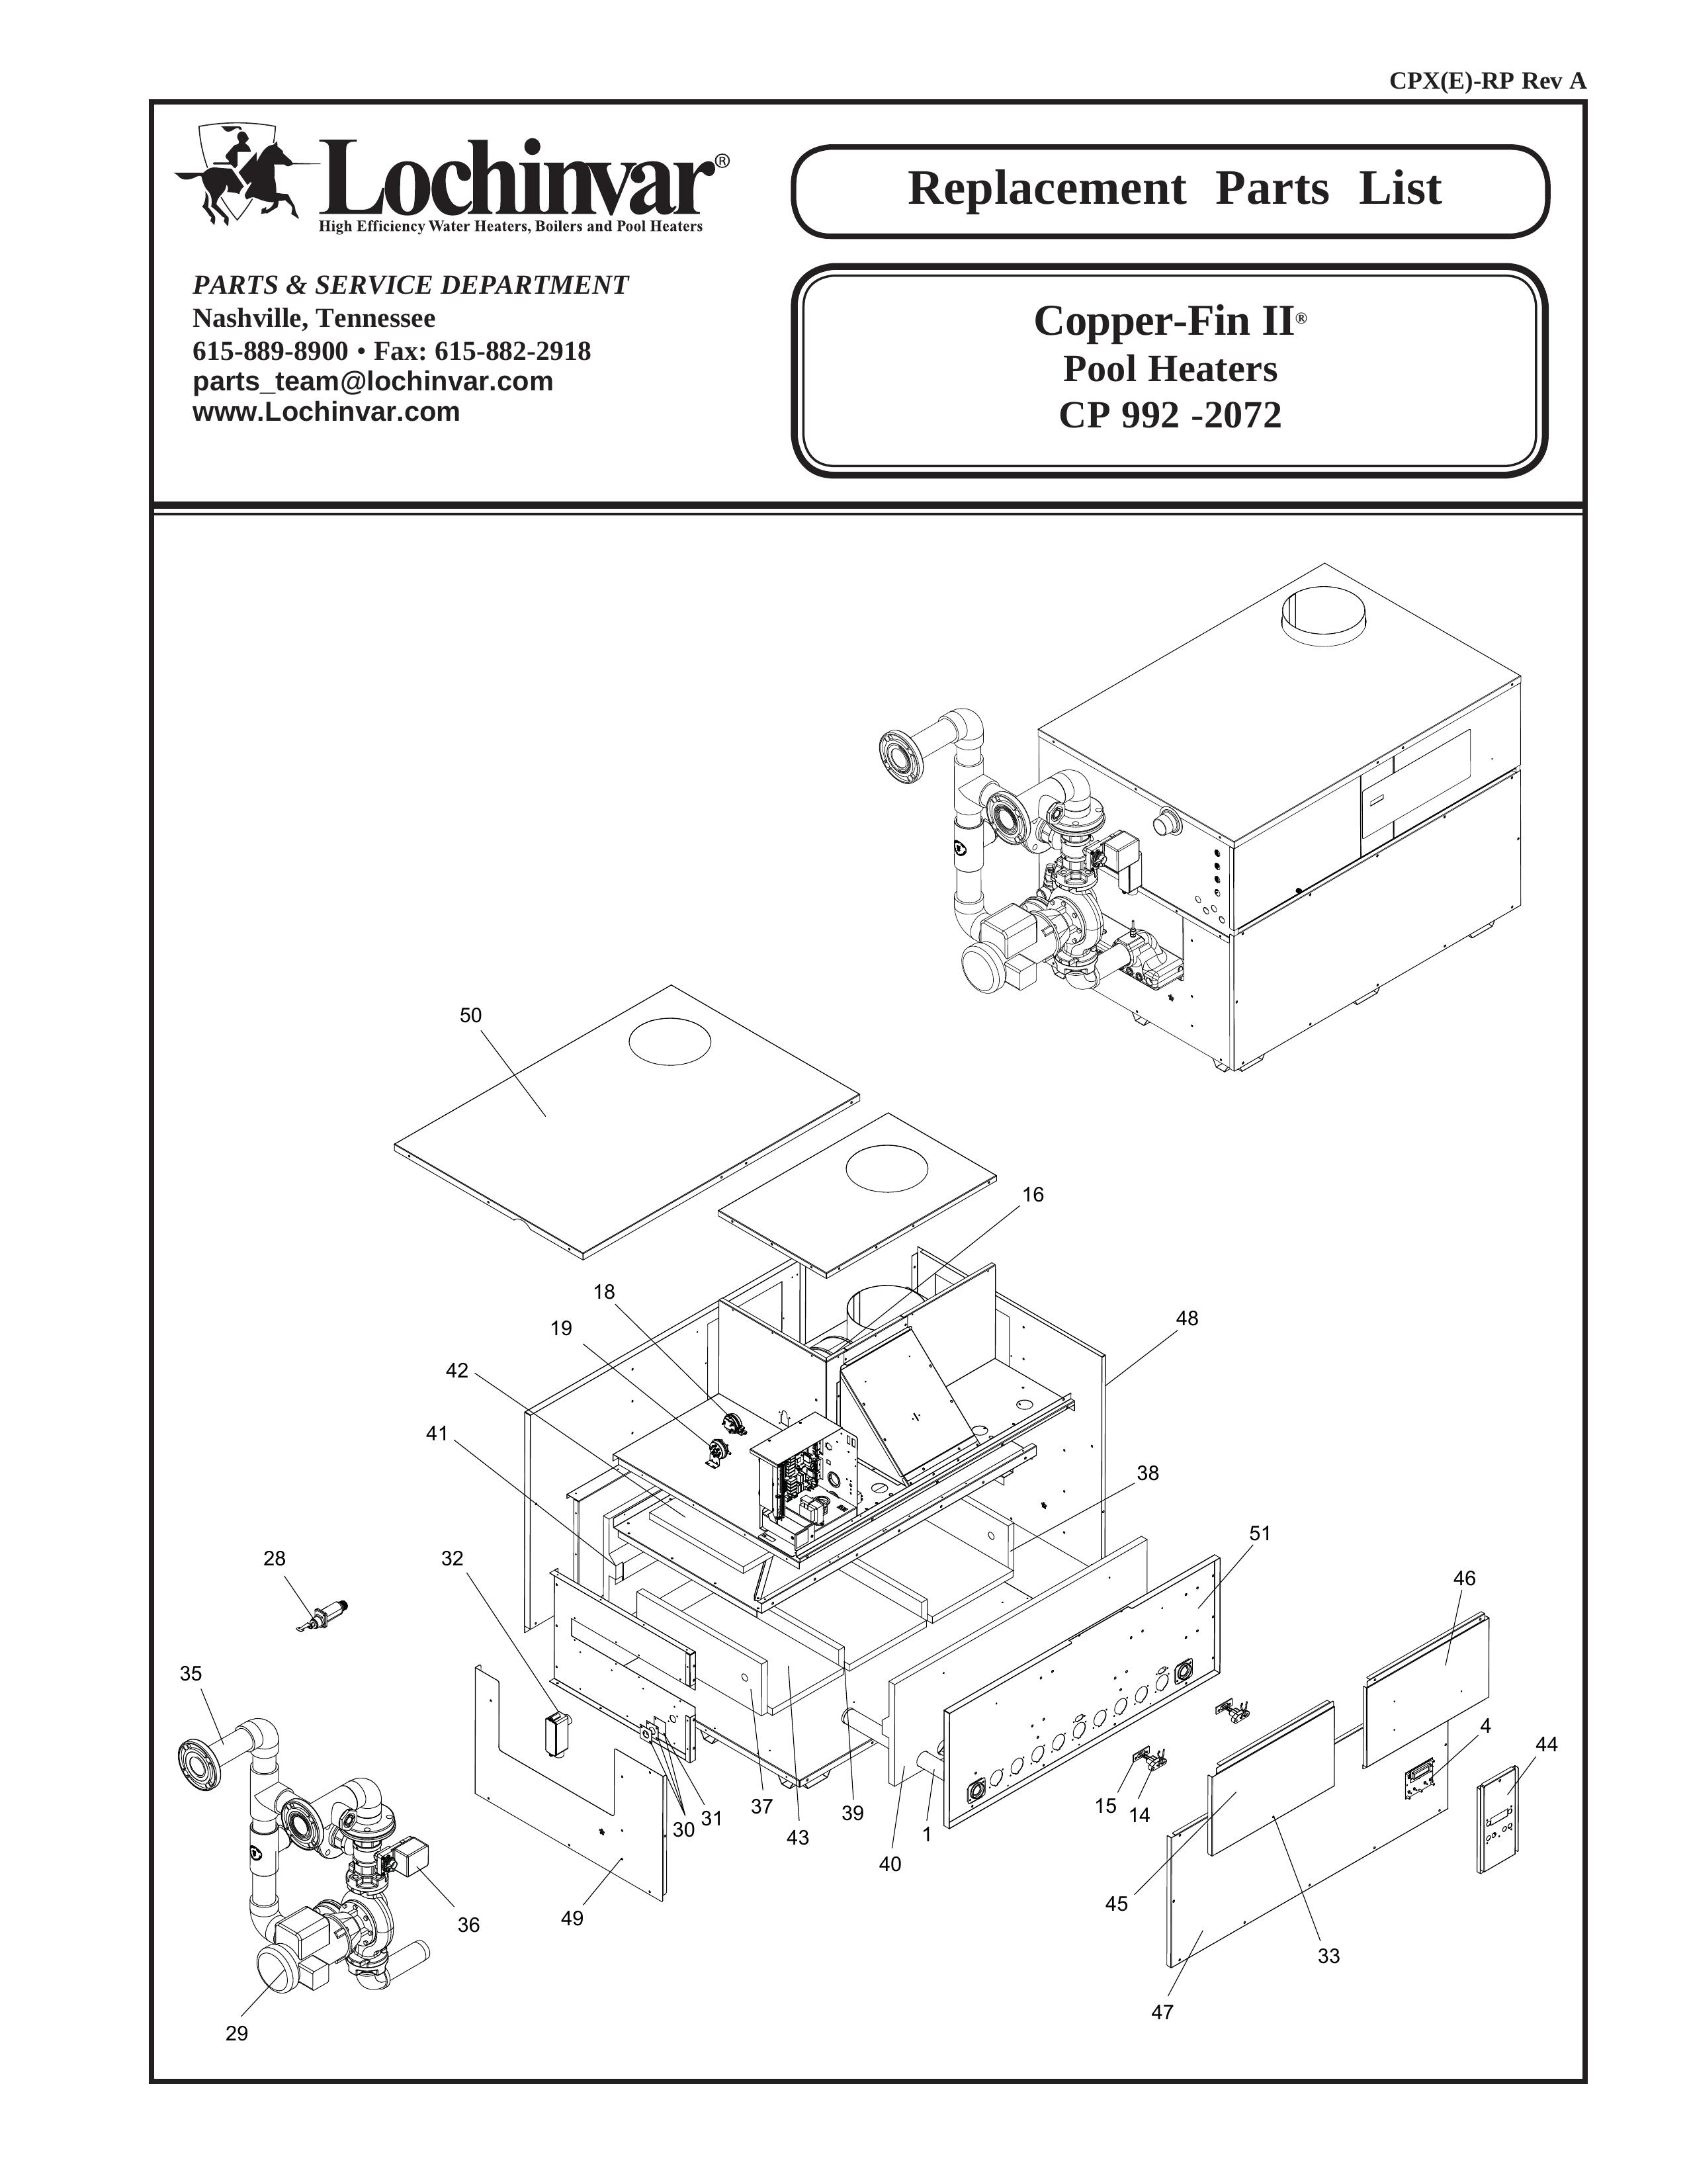 Lochinvar CP 992 -2072 Swimming Pool Heater User Manual